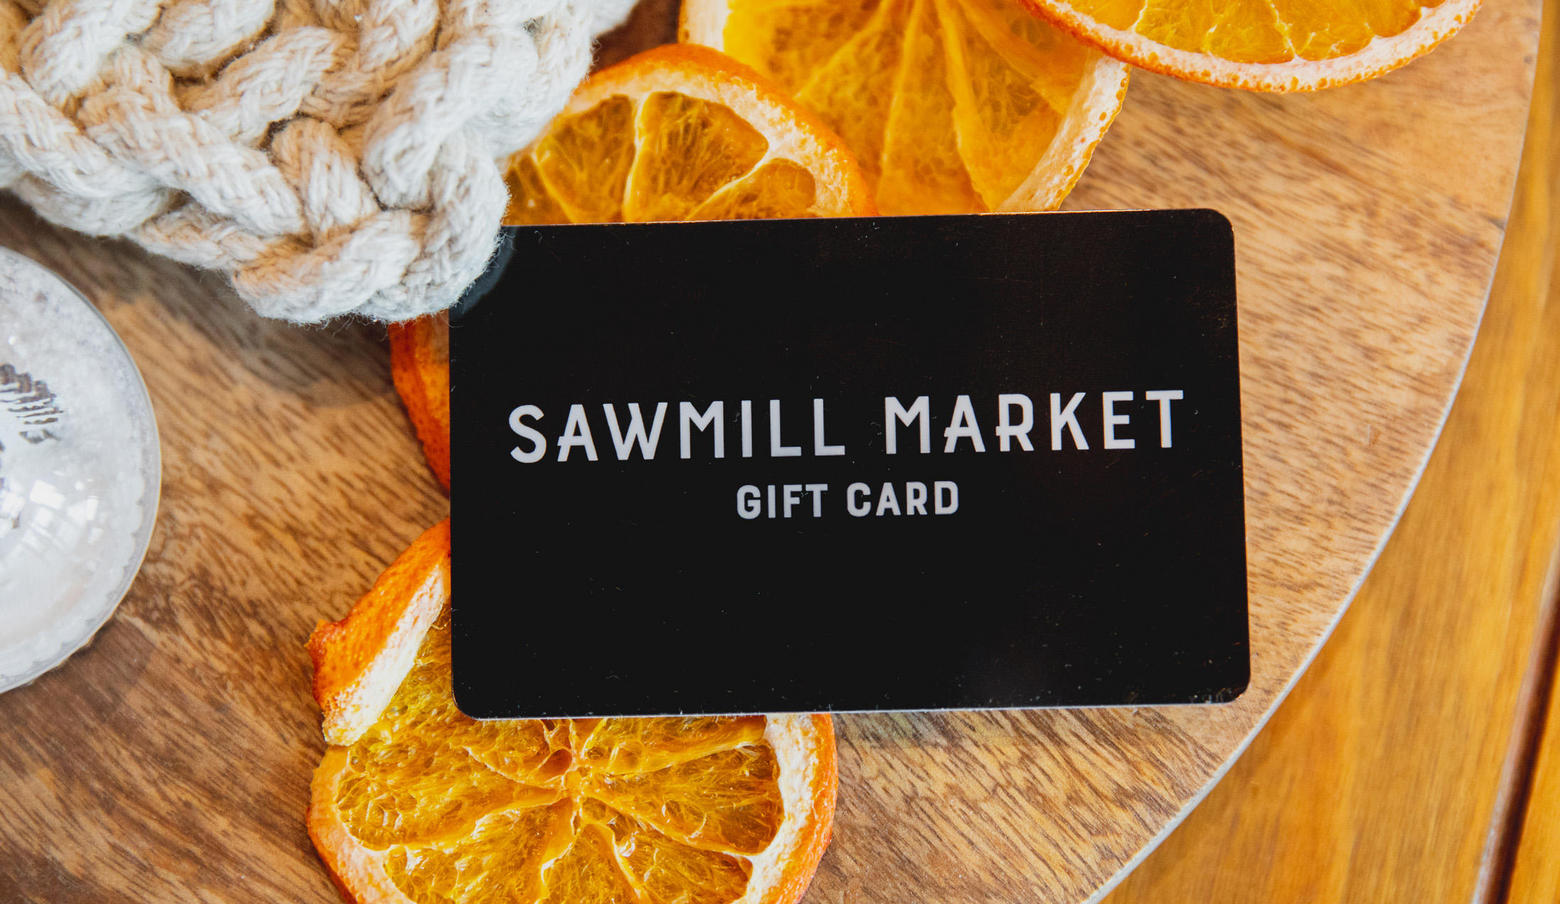 Sawmill Market gift card